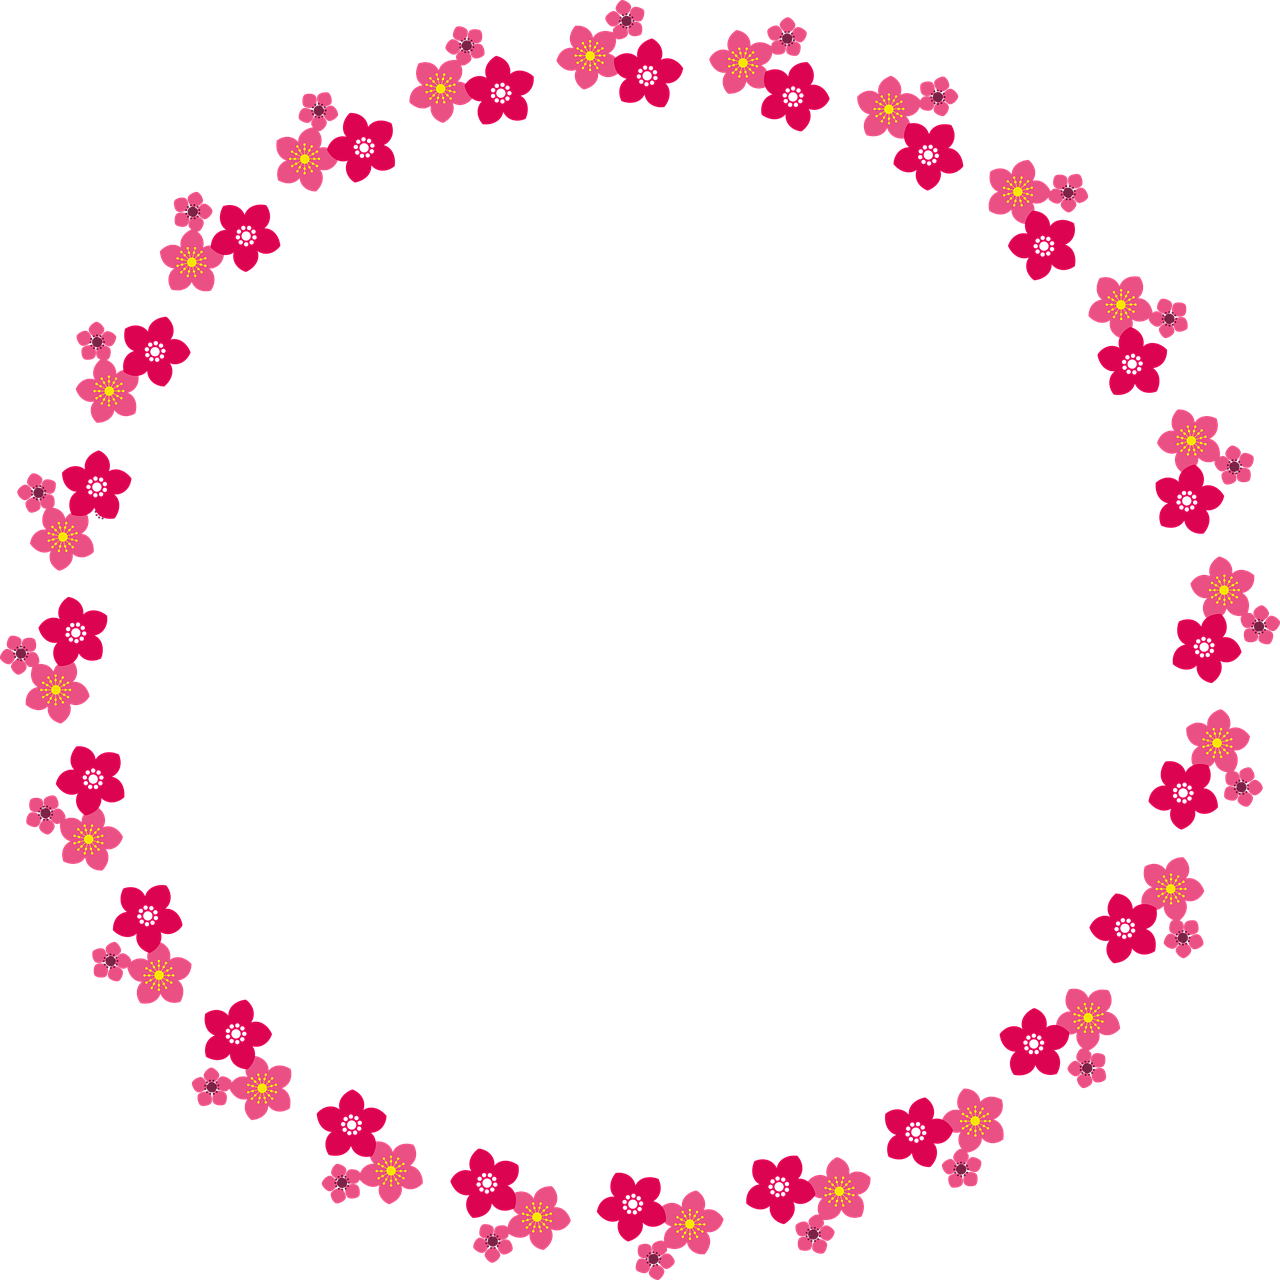 Pink Floral Circle Border Frame PNG Image